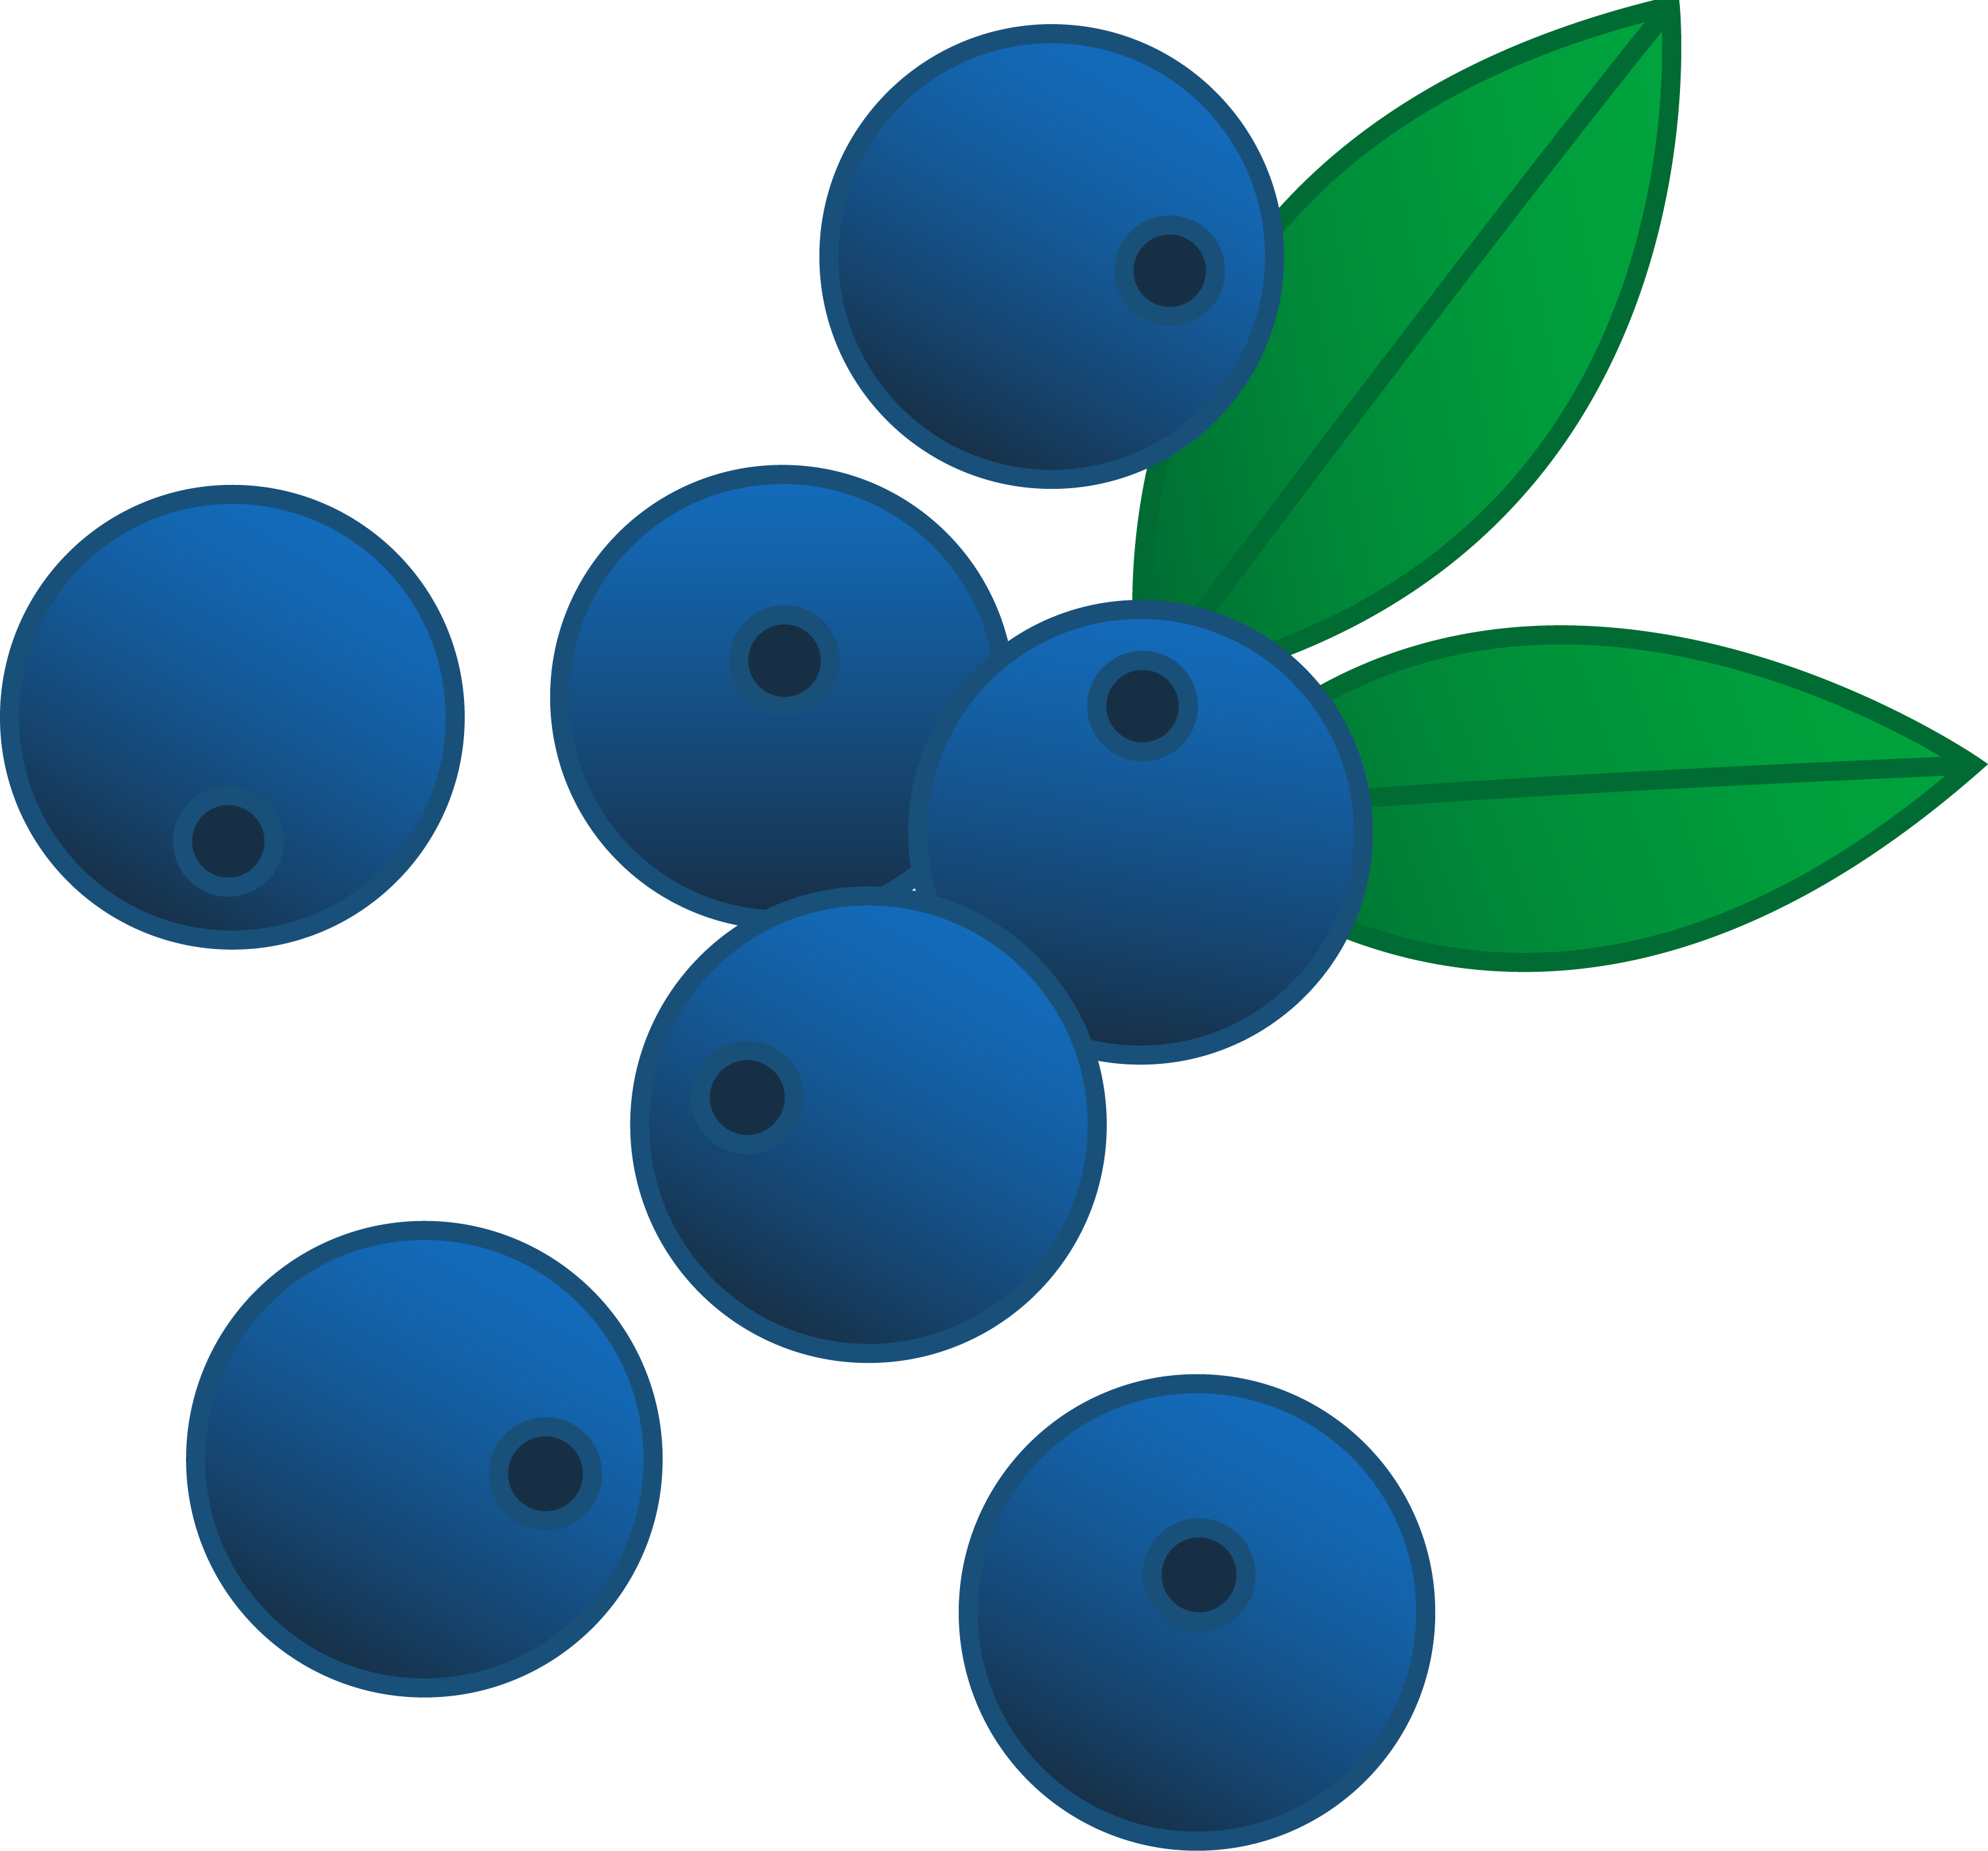 Free Blueberry Clip Art